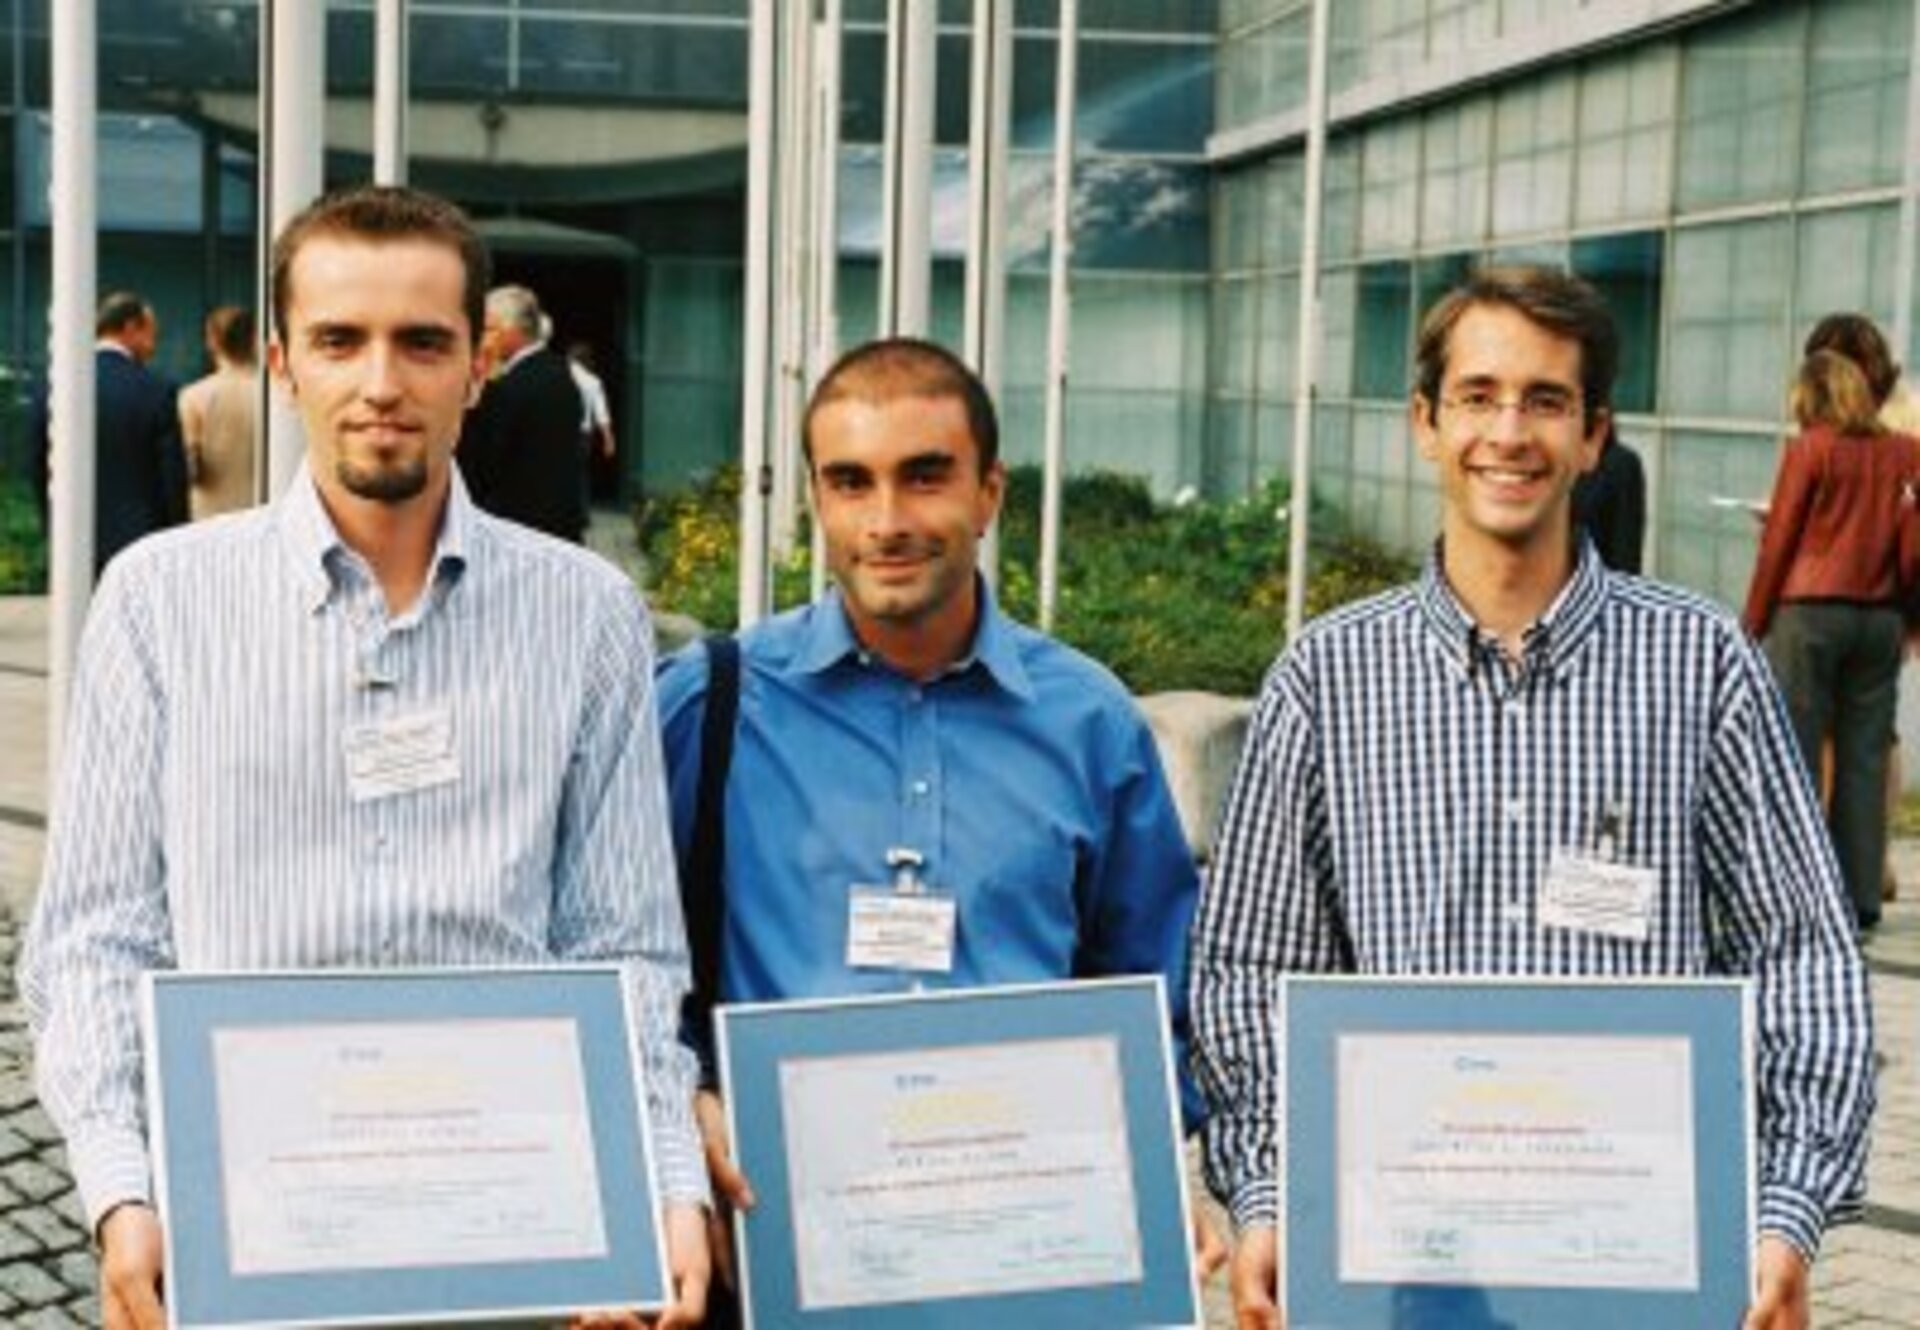 From left to right: Adalberto Costessi (1st prize), Roberto Rusconi (2nd prize), Eric Belin de Chantem&egrave;le (3rd prize)